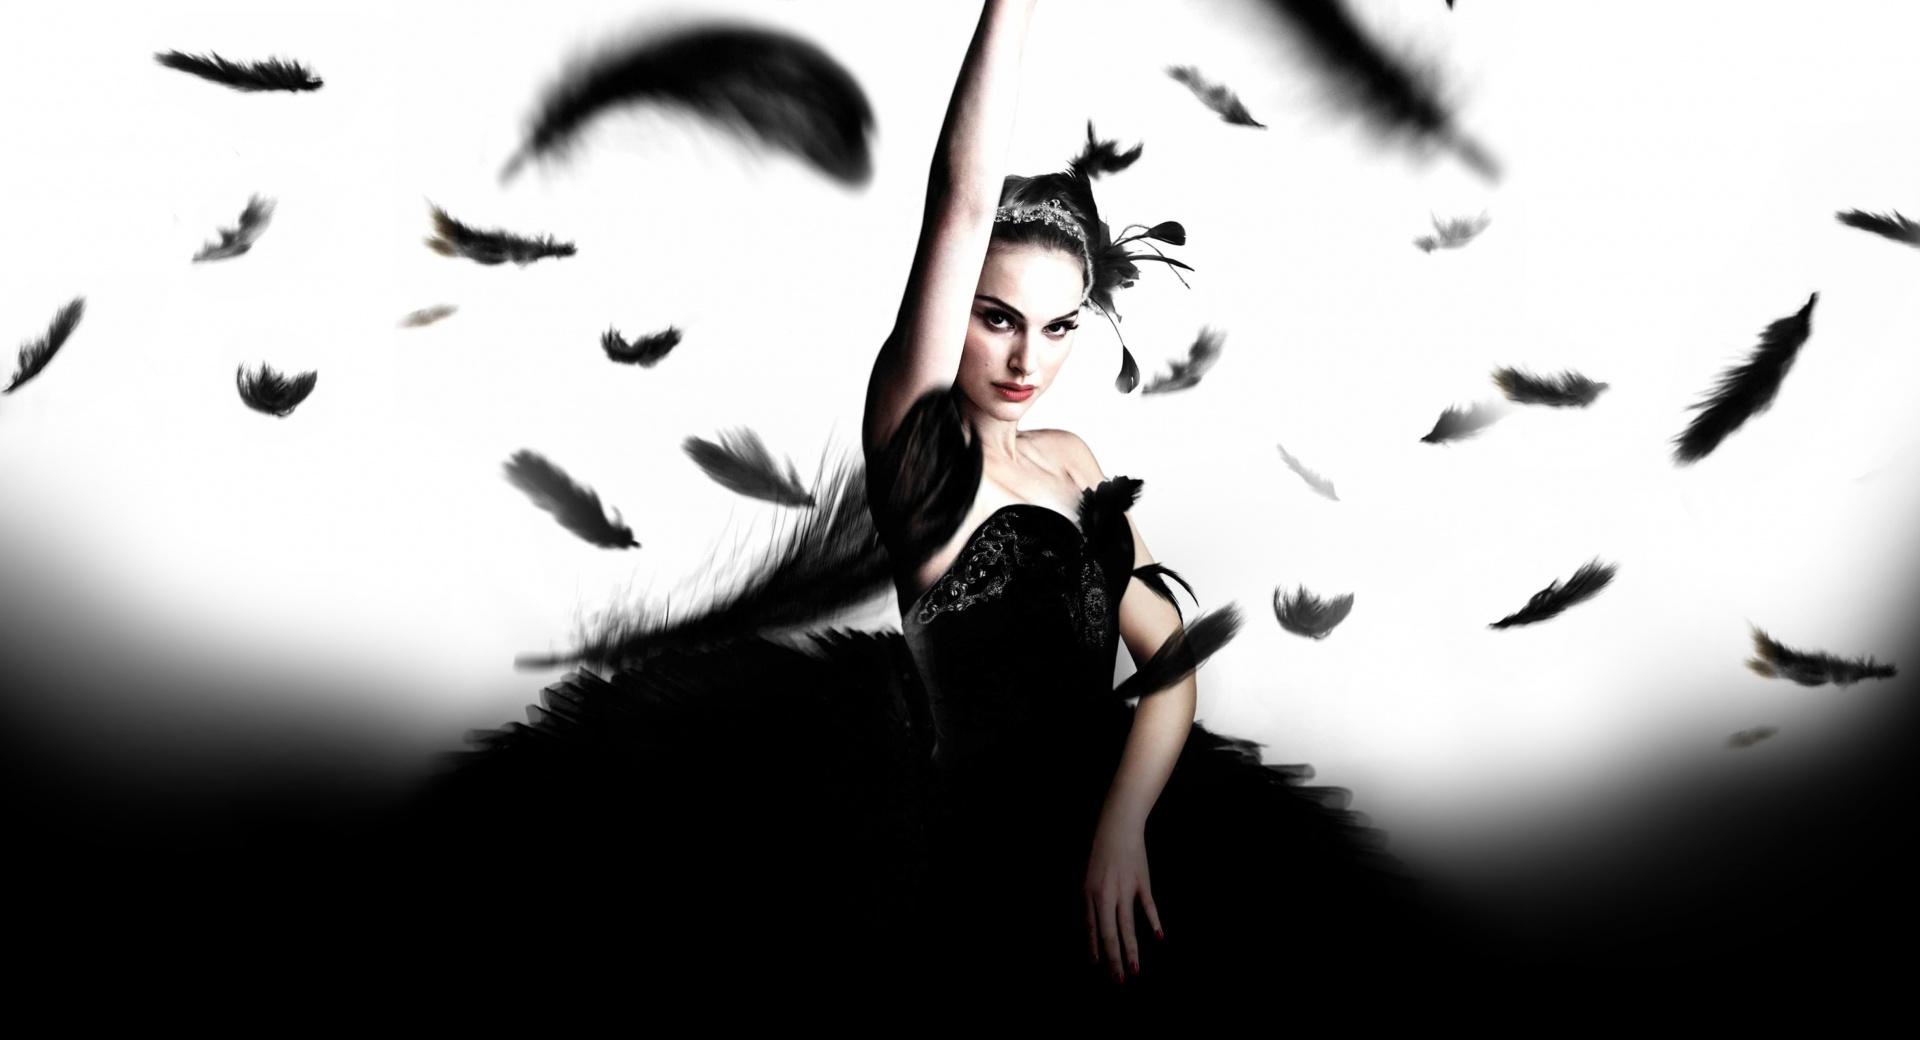 Black Swan Natalie Portman at 2048 x 2048 iPad size wallpapers HD quality